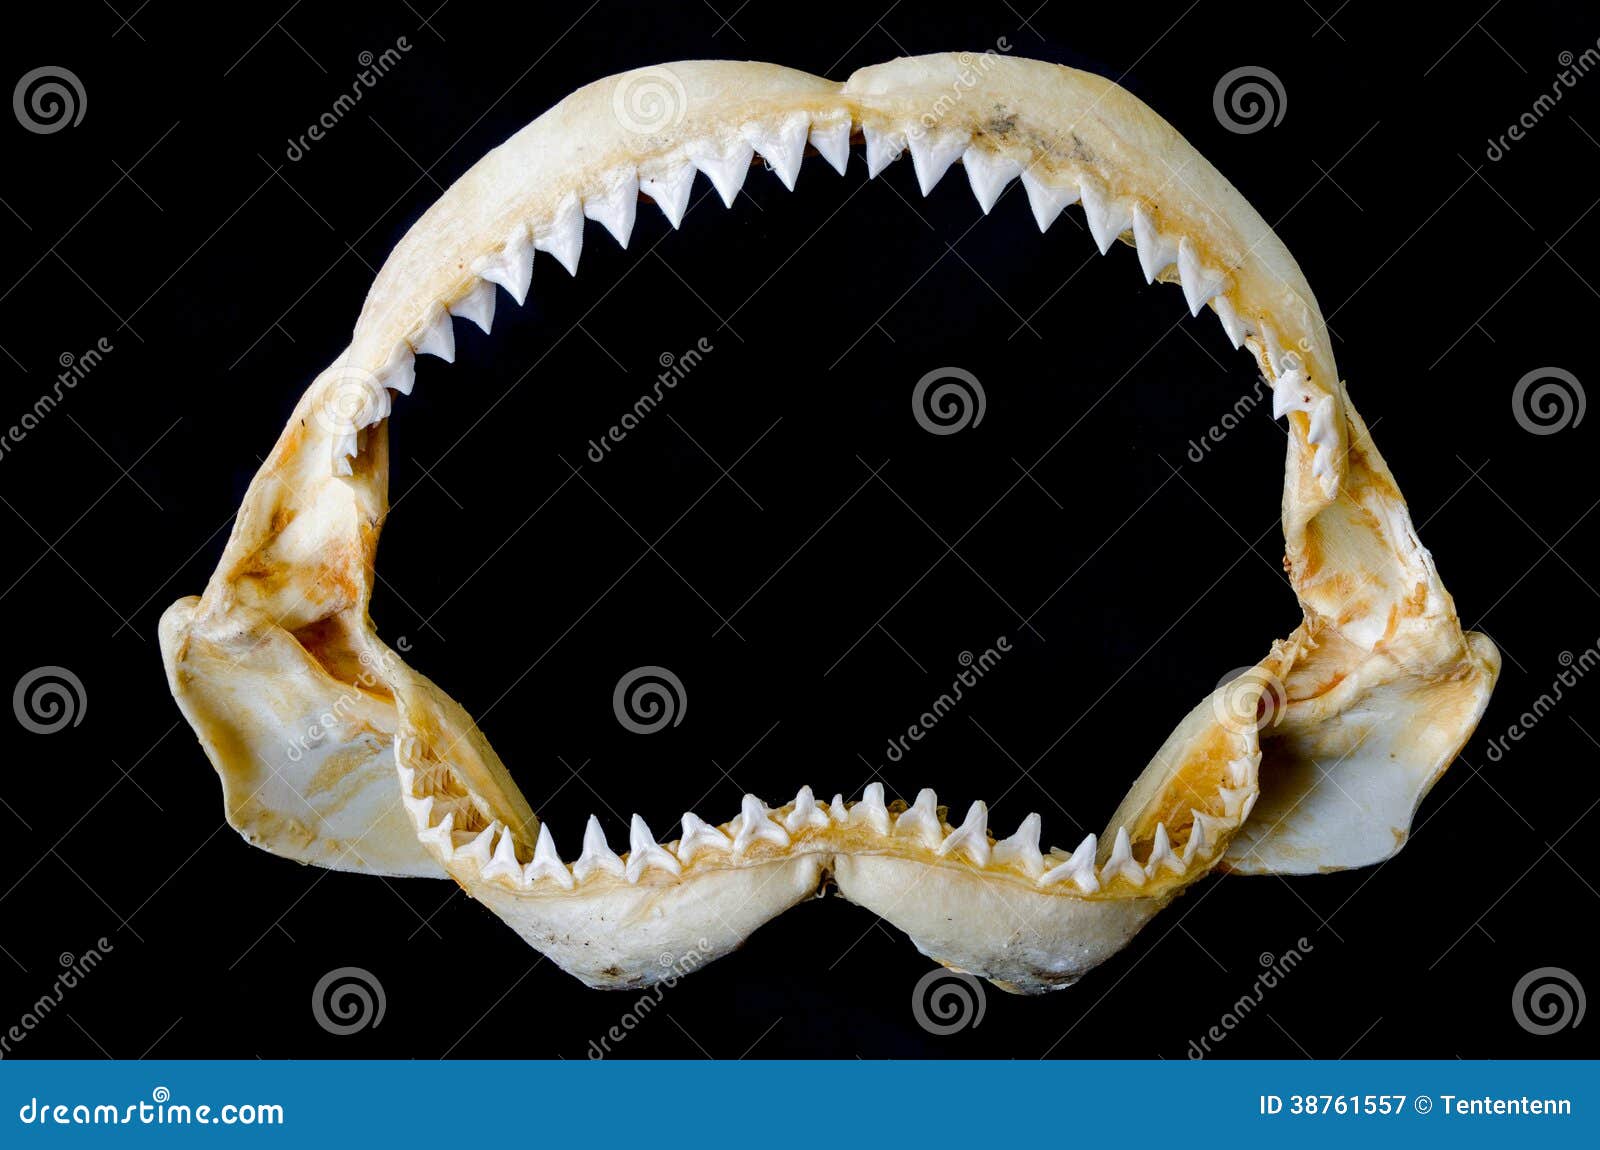 shark jaw bone